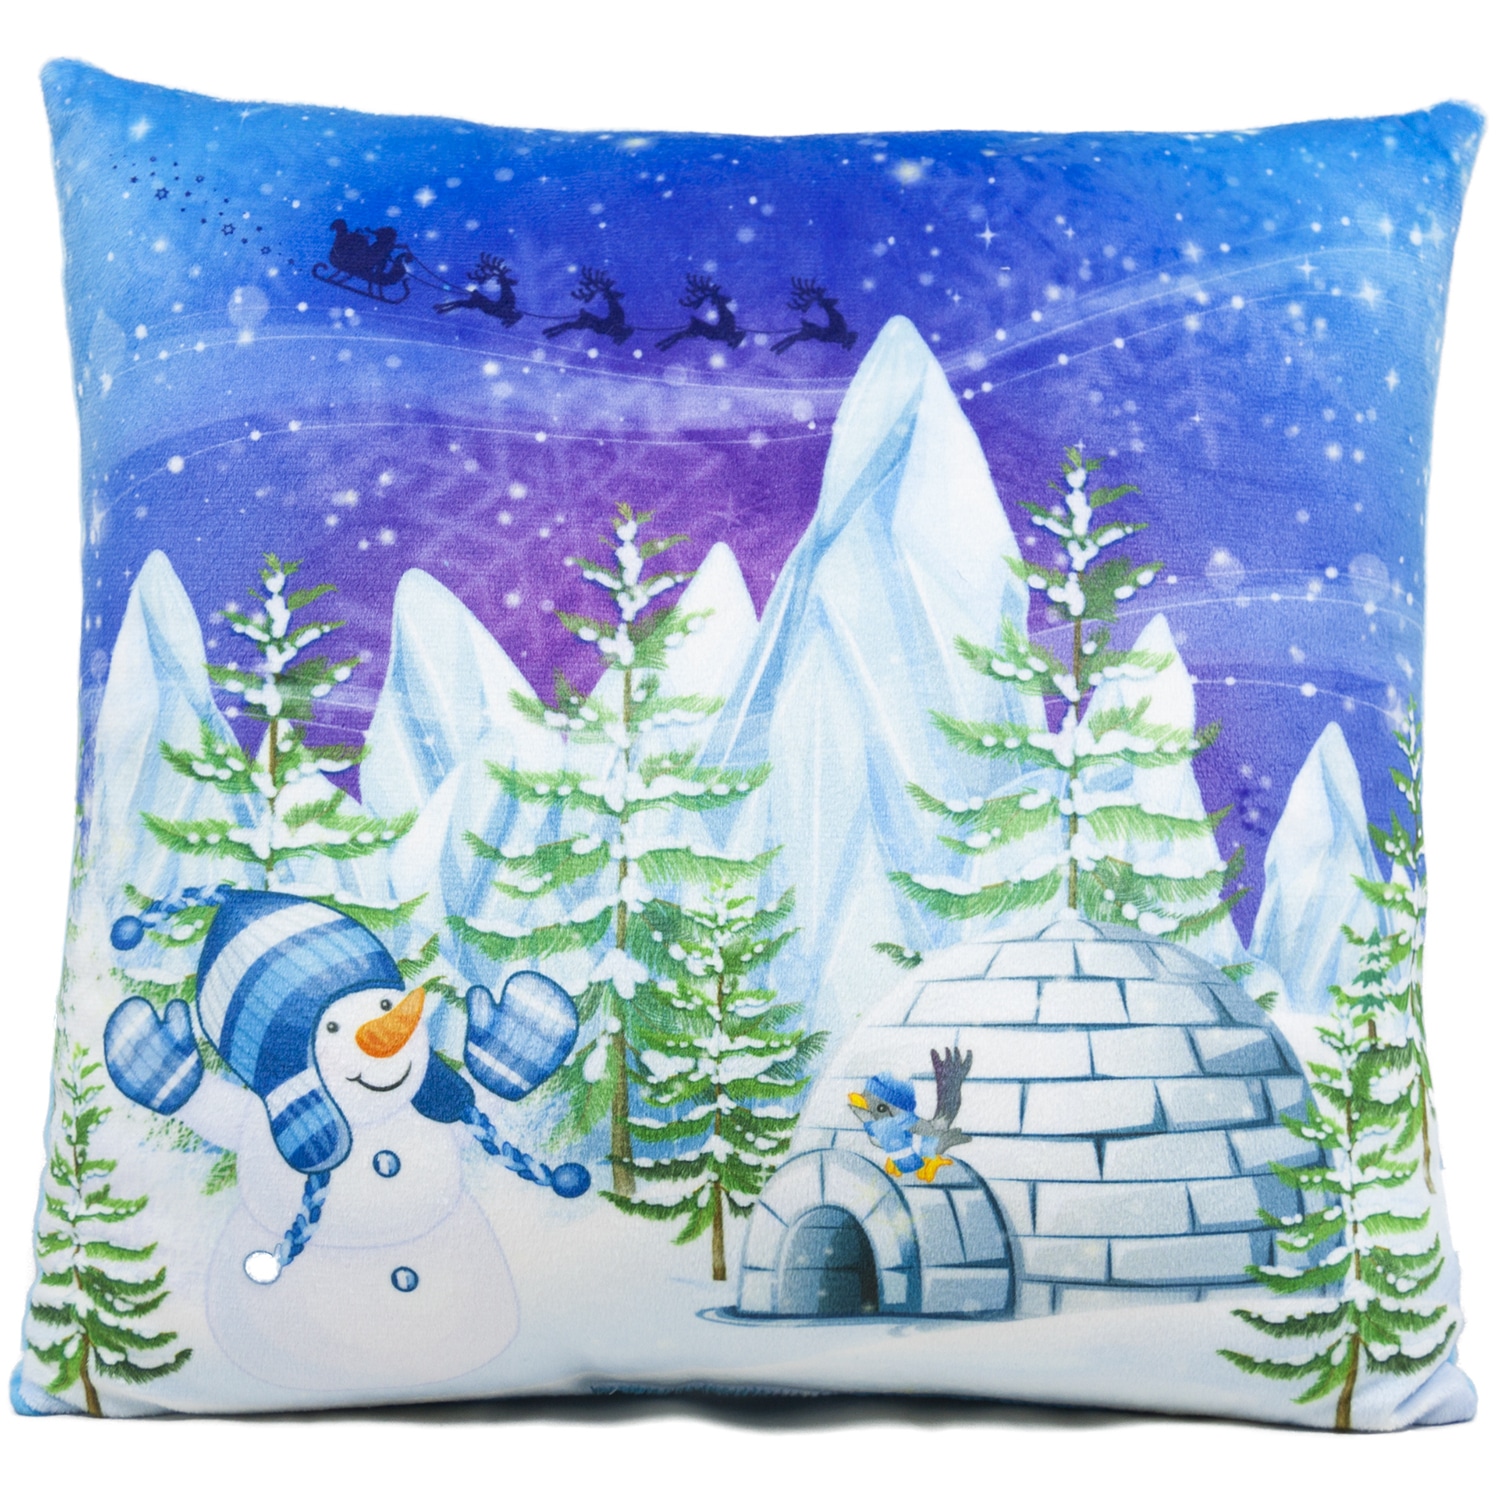 Christmas pillow - Snowman with an igloo